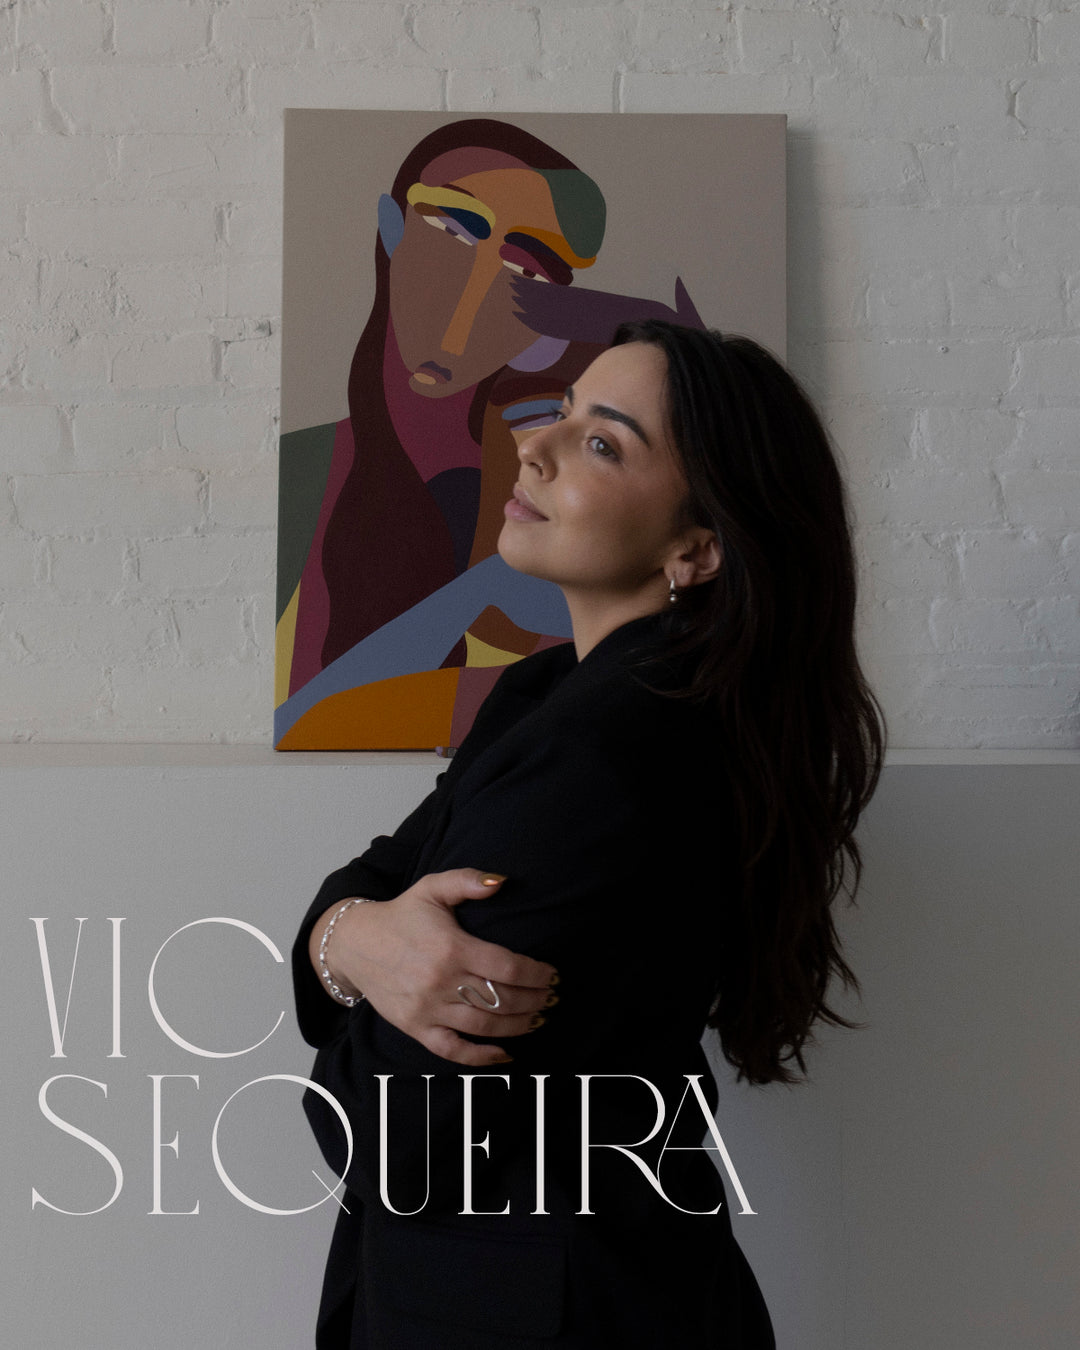 HER JOURNEY  |  Victoria Sequeira